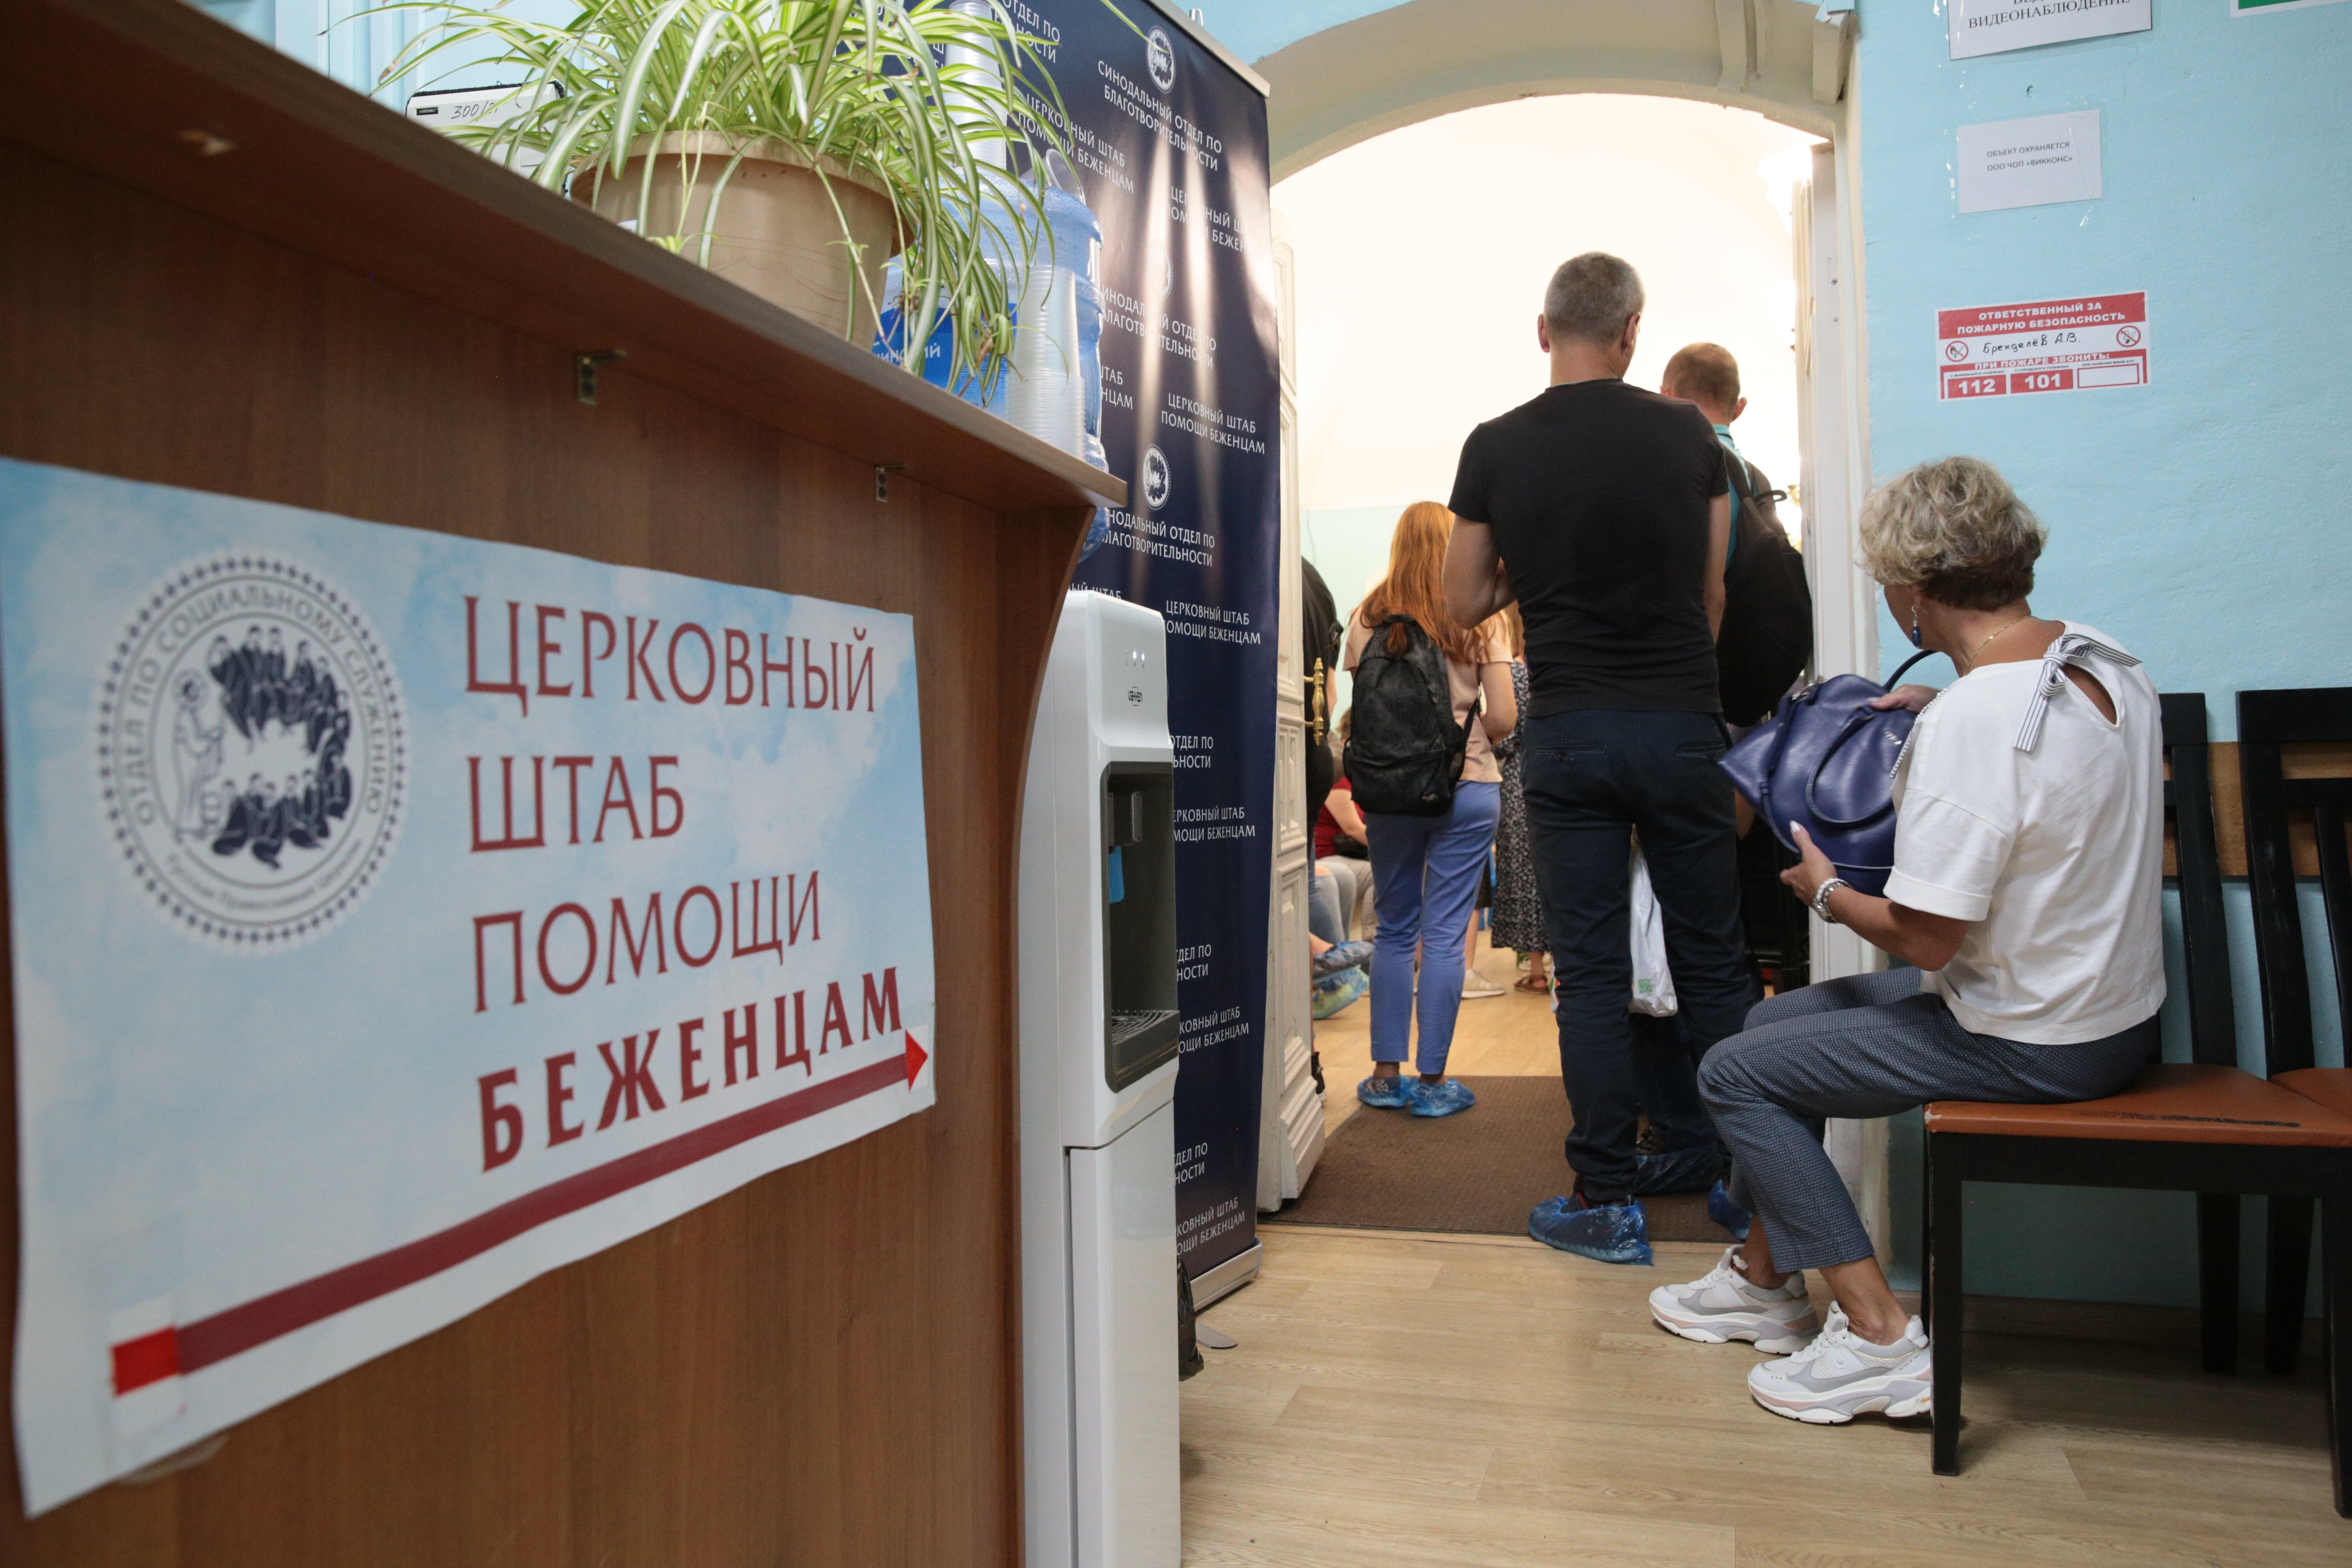 Церковный штаб помощи беженцам в Москве. Фото Владимира Ештокина